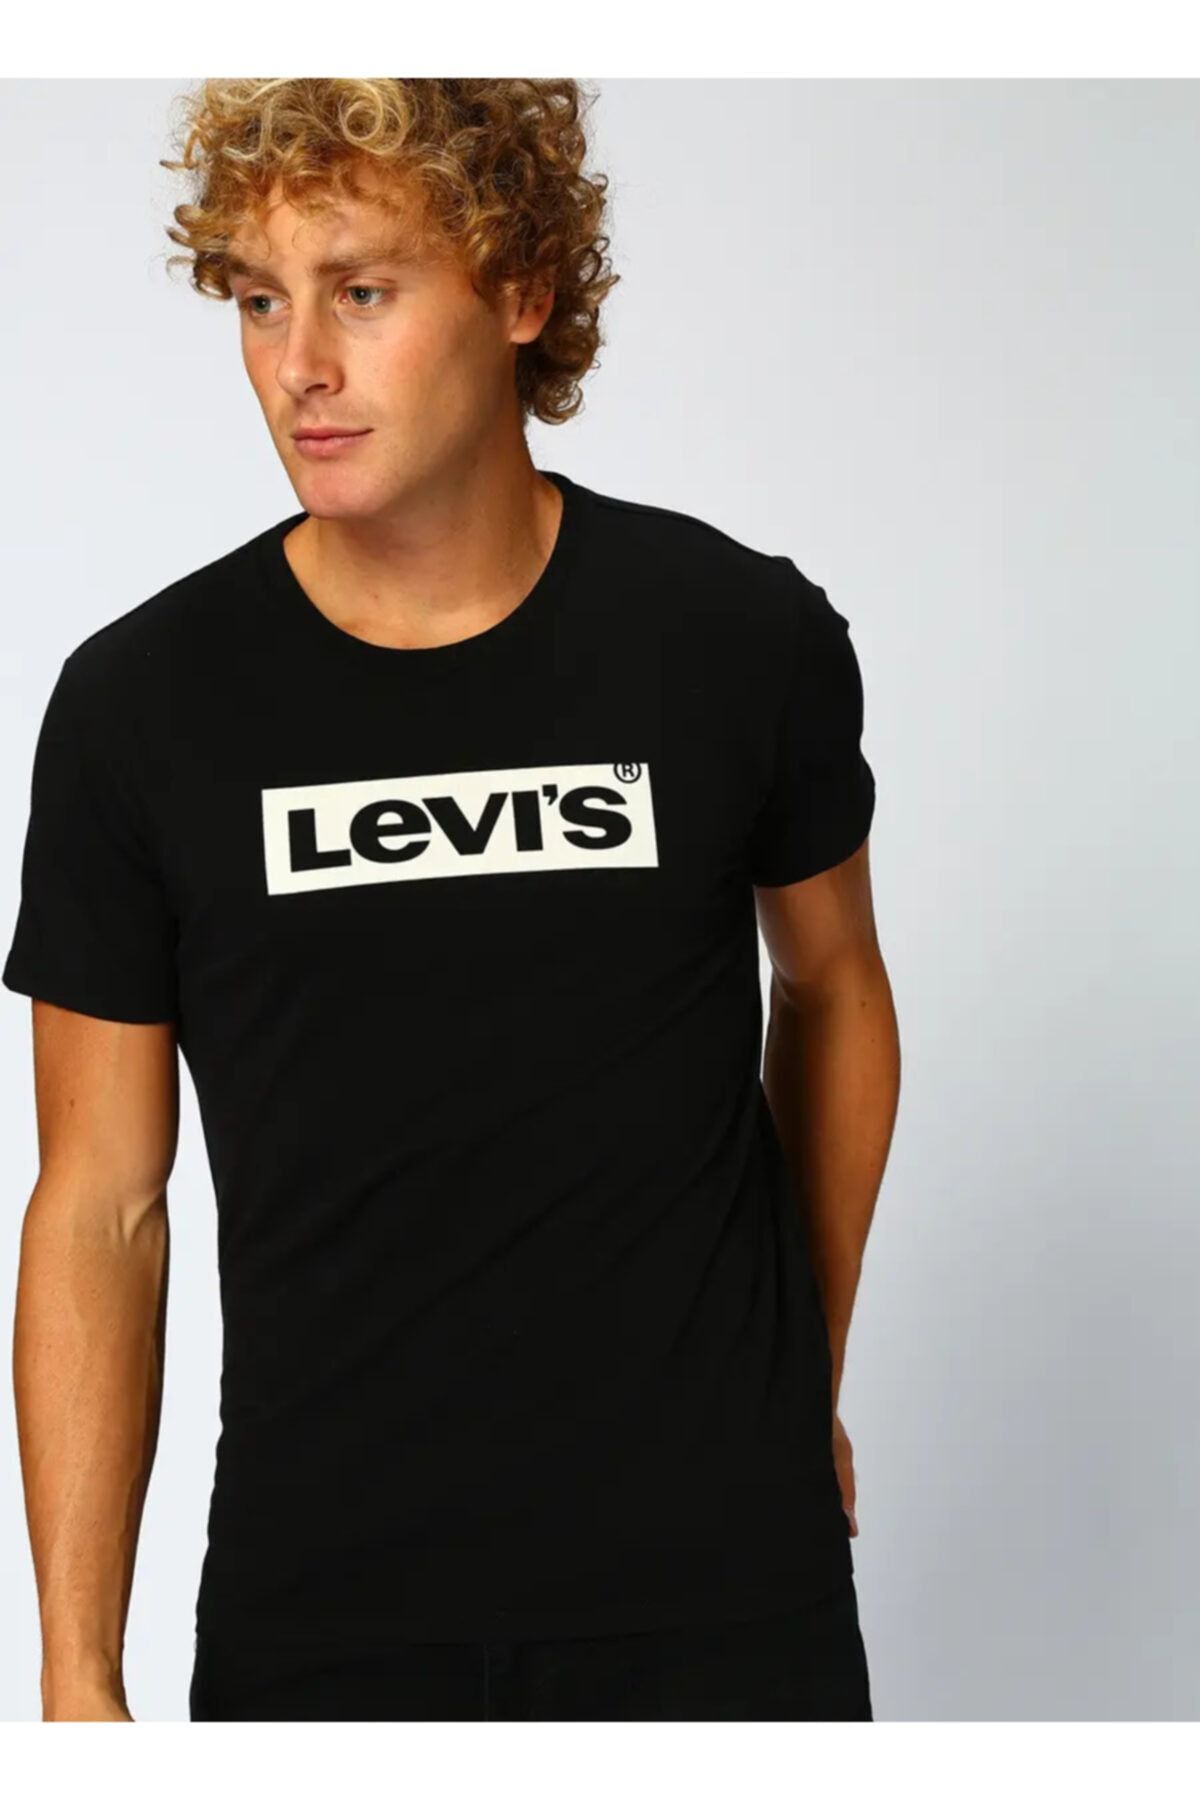 Levi's Erkek Siyah Levis Baskılı T-shirt 22491-0427